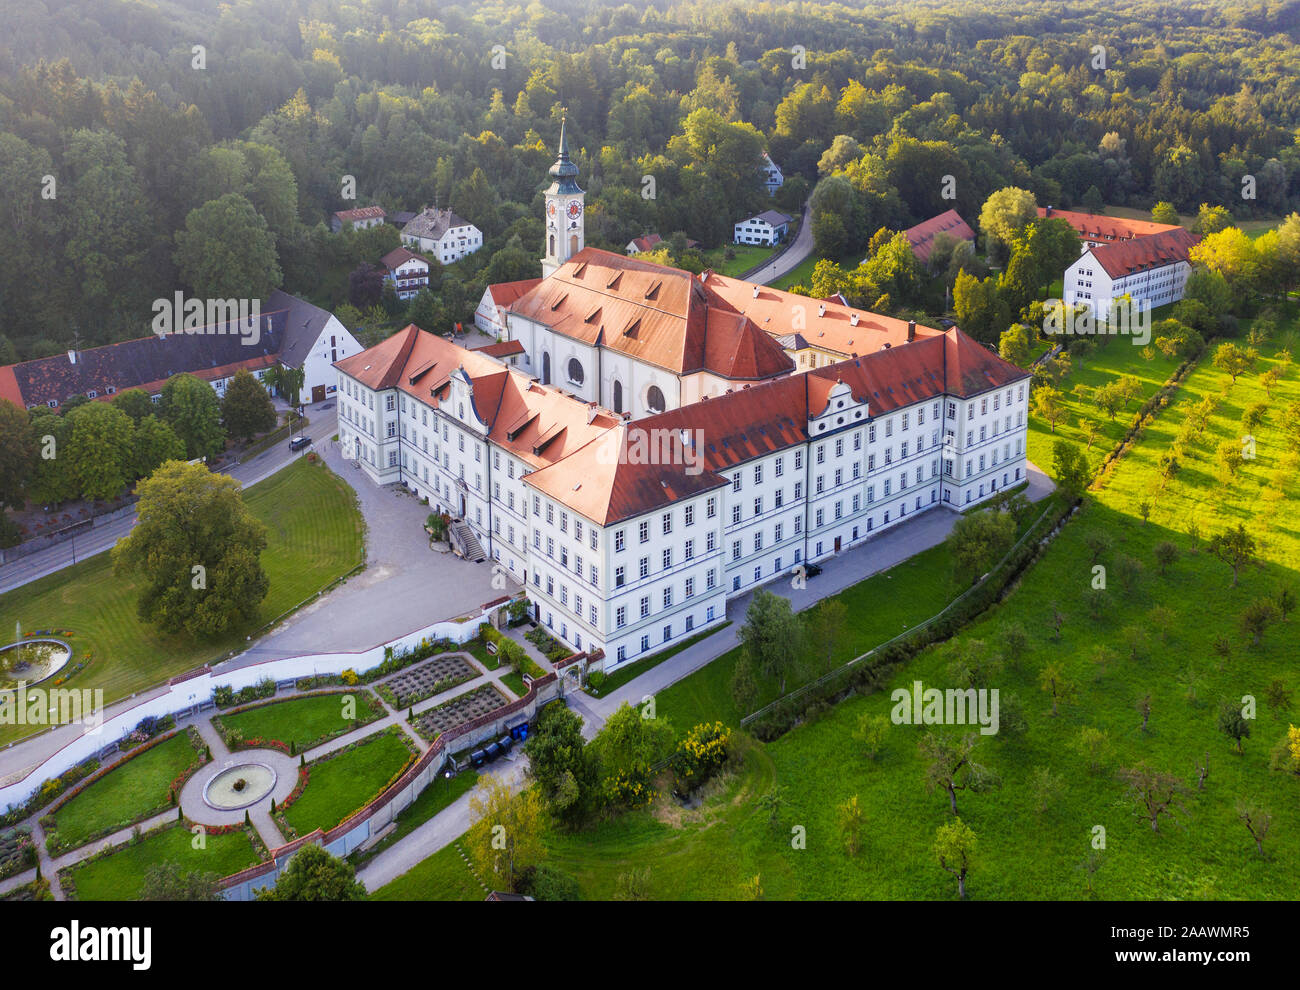 Germany, Bavaria, Isartal, aerial view of Schftlarn Abbey Stock Photo